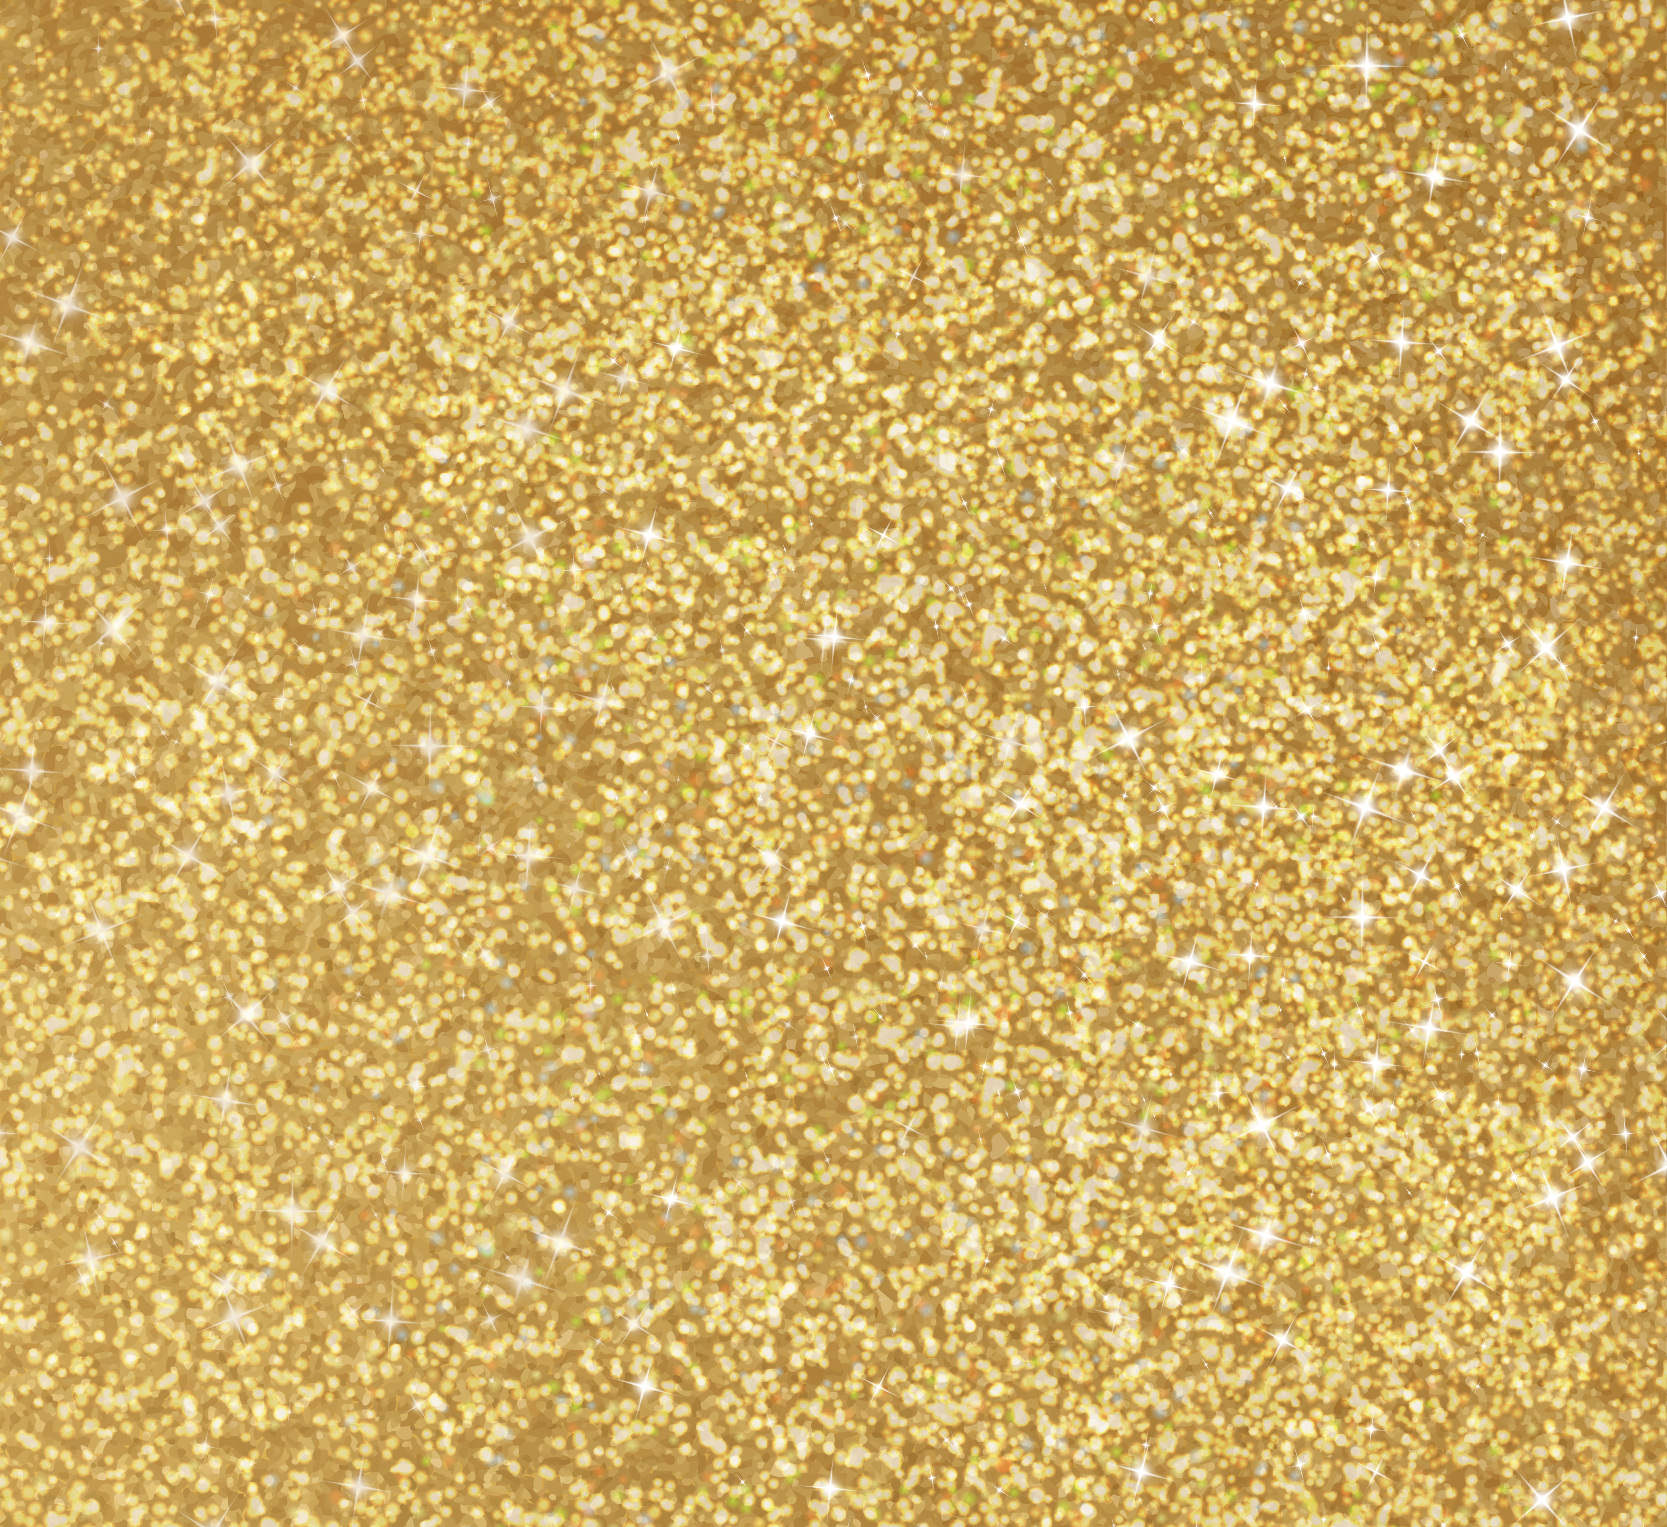  Gold Glitter Backgrounds HQ Backgrounds FreeCreatives